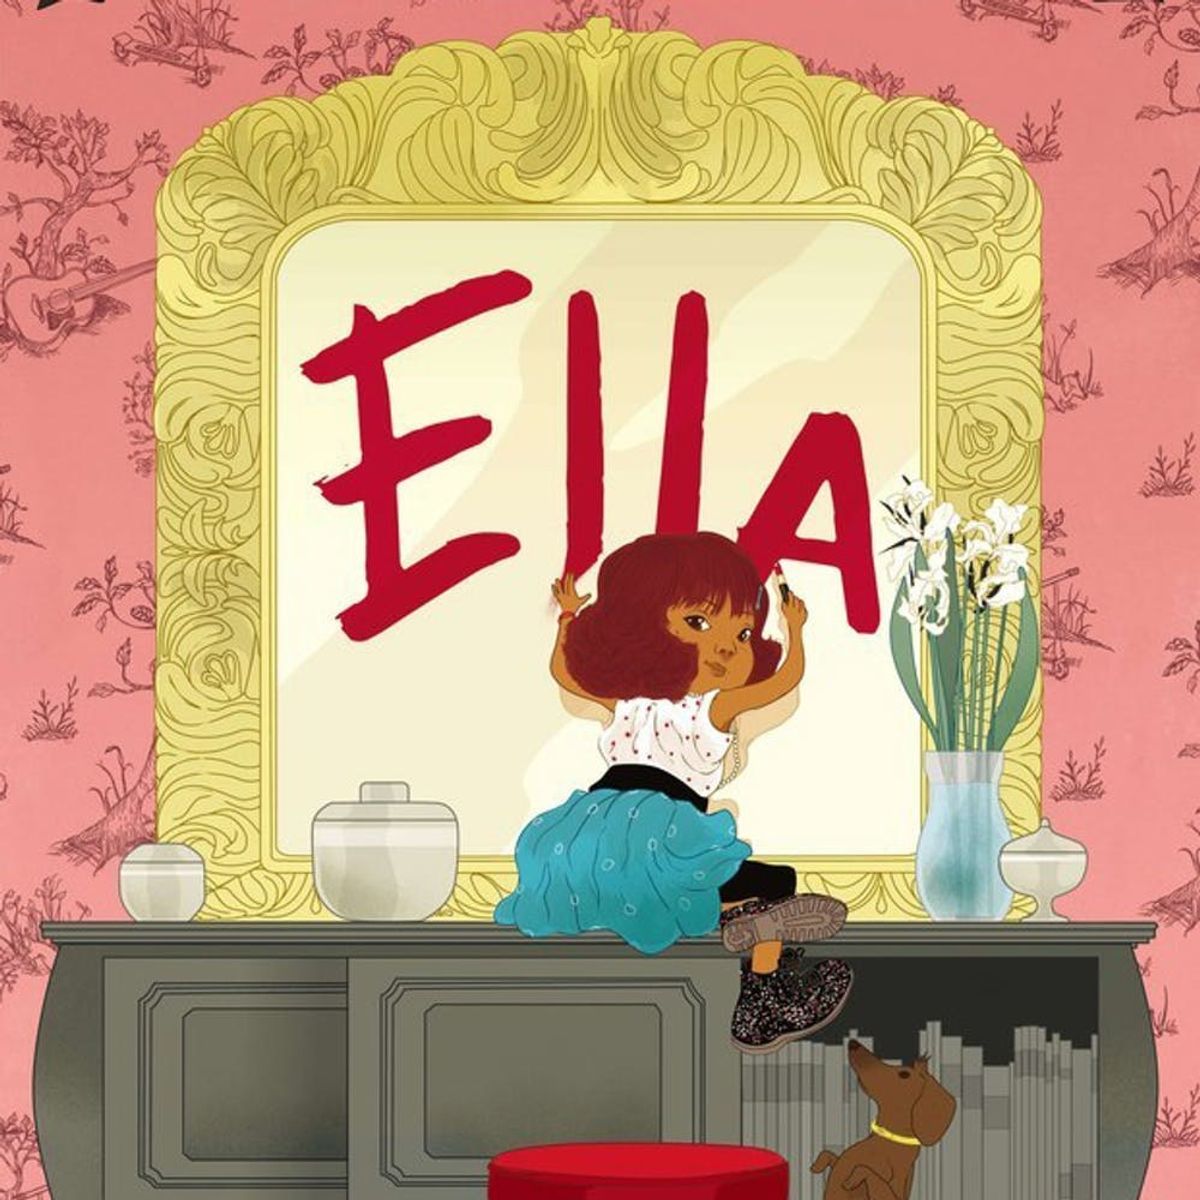 Meet Ella, the Hippest Character in Children’s Lit